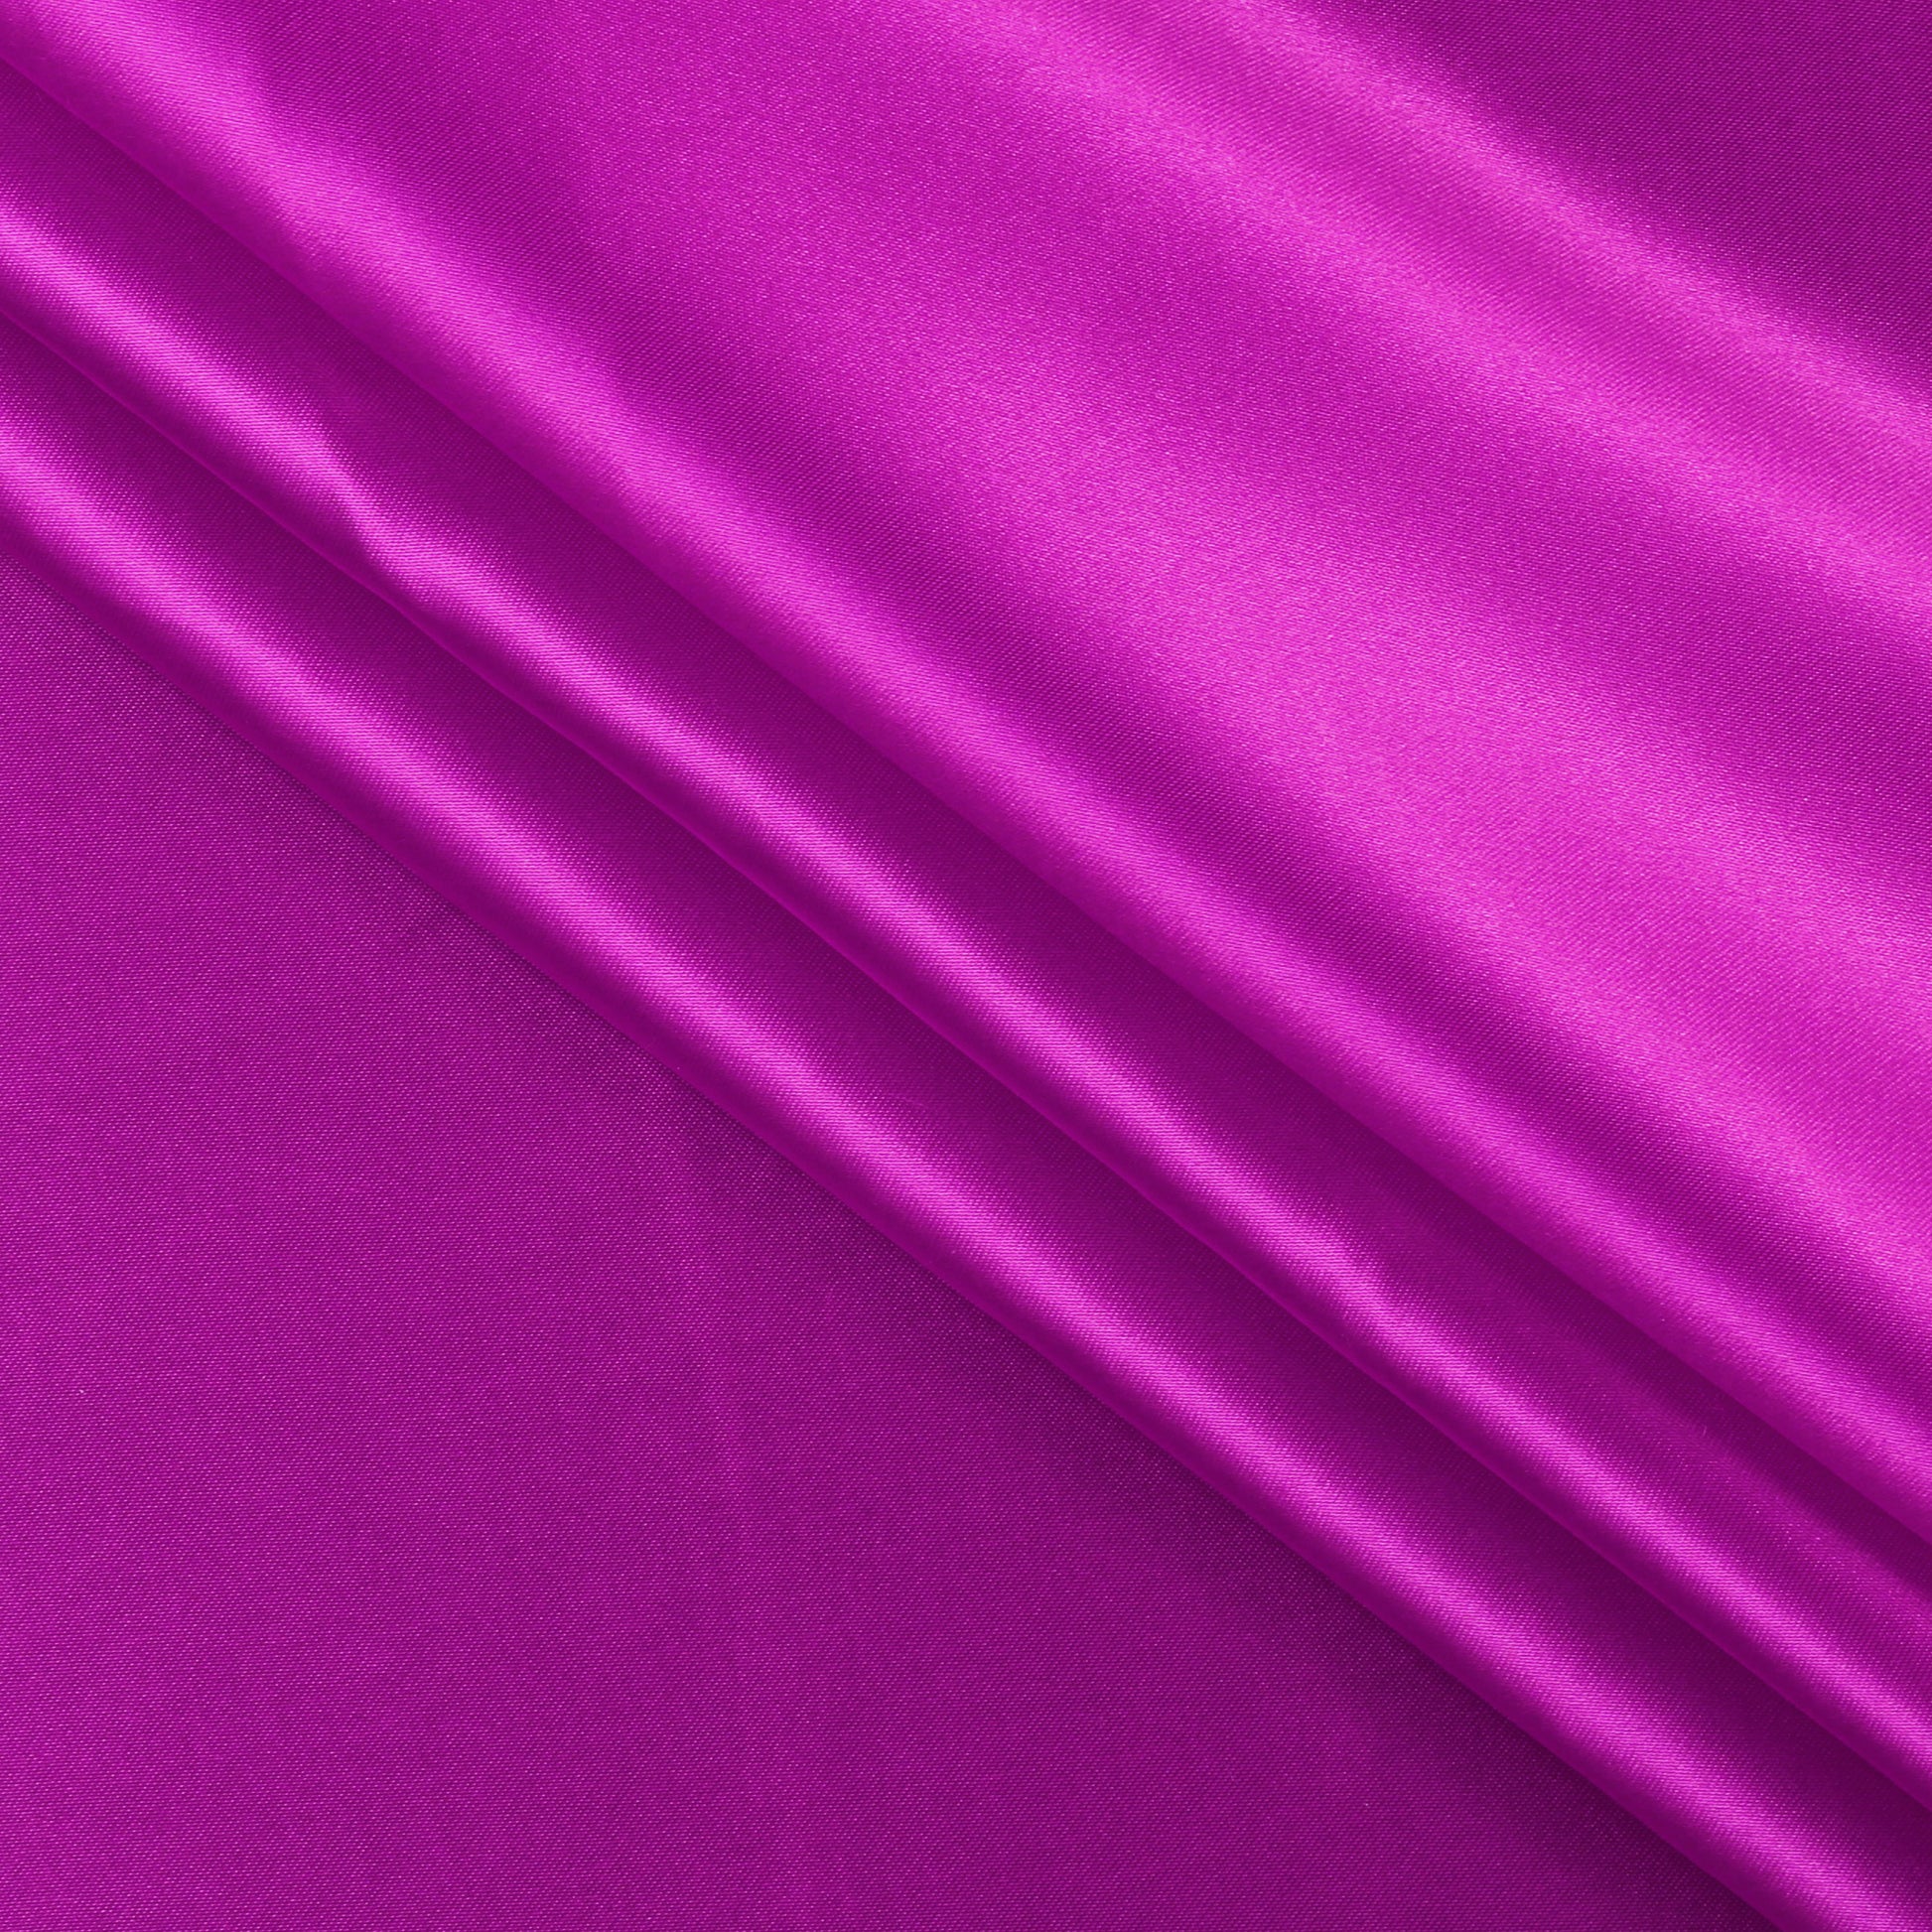 Magenta Violet,f6705c65-f5a6-4061-b8c9-62b10acdf9d4